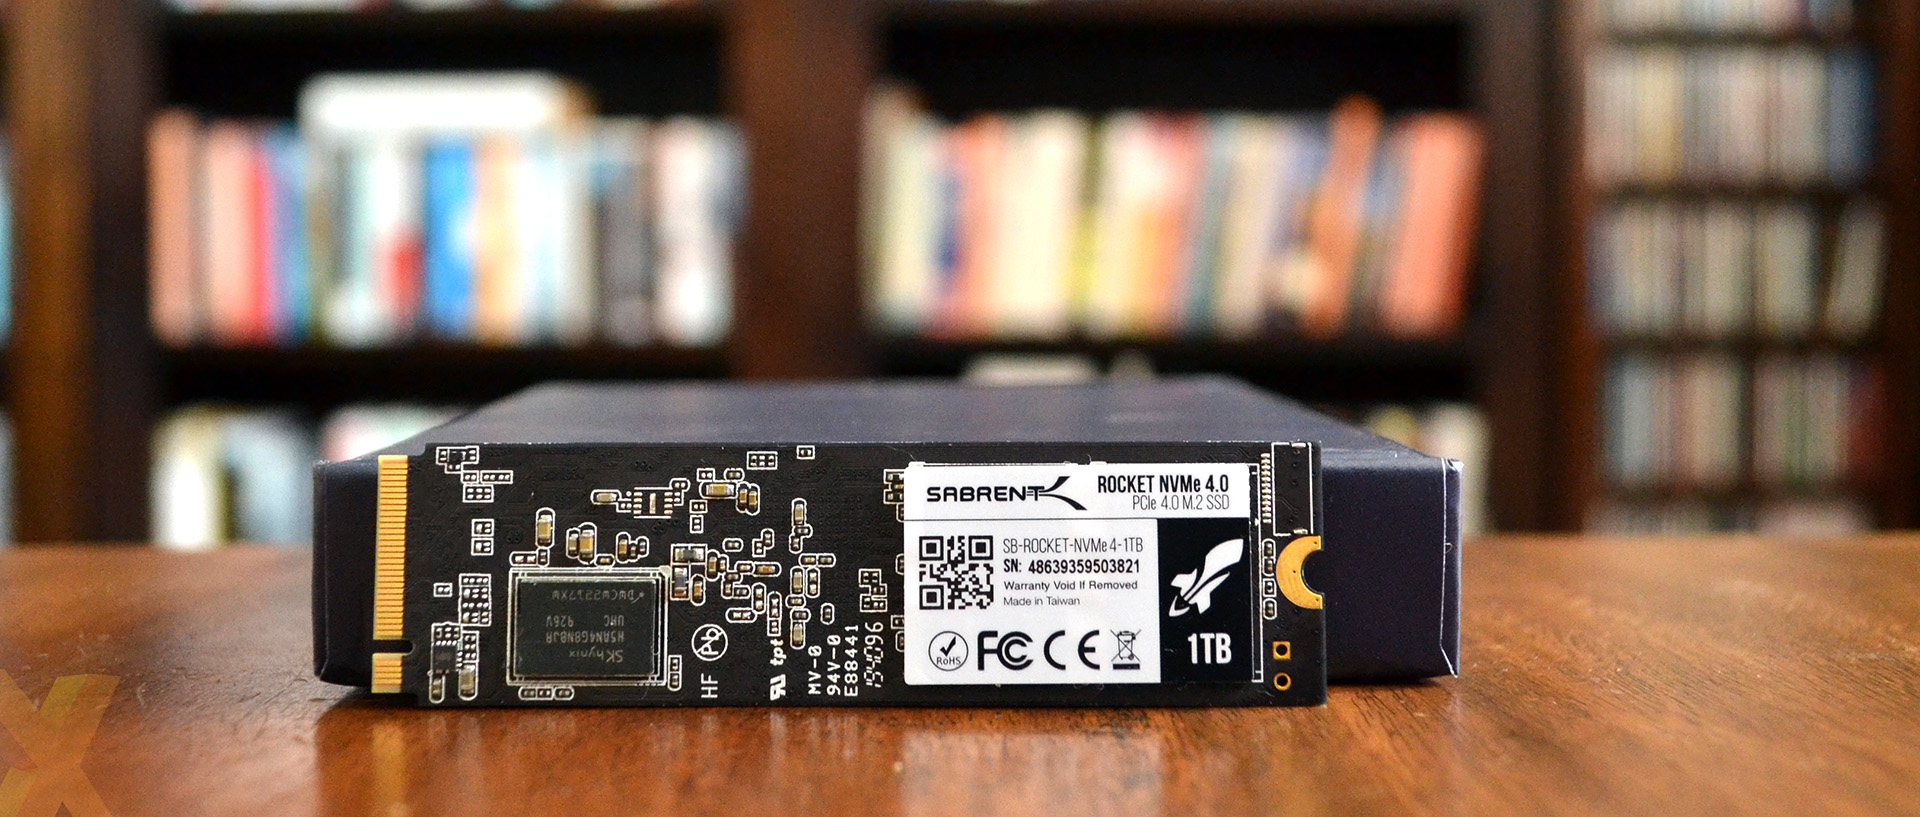 Review: Sabrent Rocket 4.0 NVMe PCIe SSD (1TB) - Storage - HEXUS.net